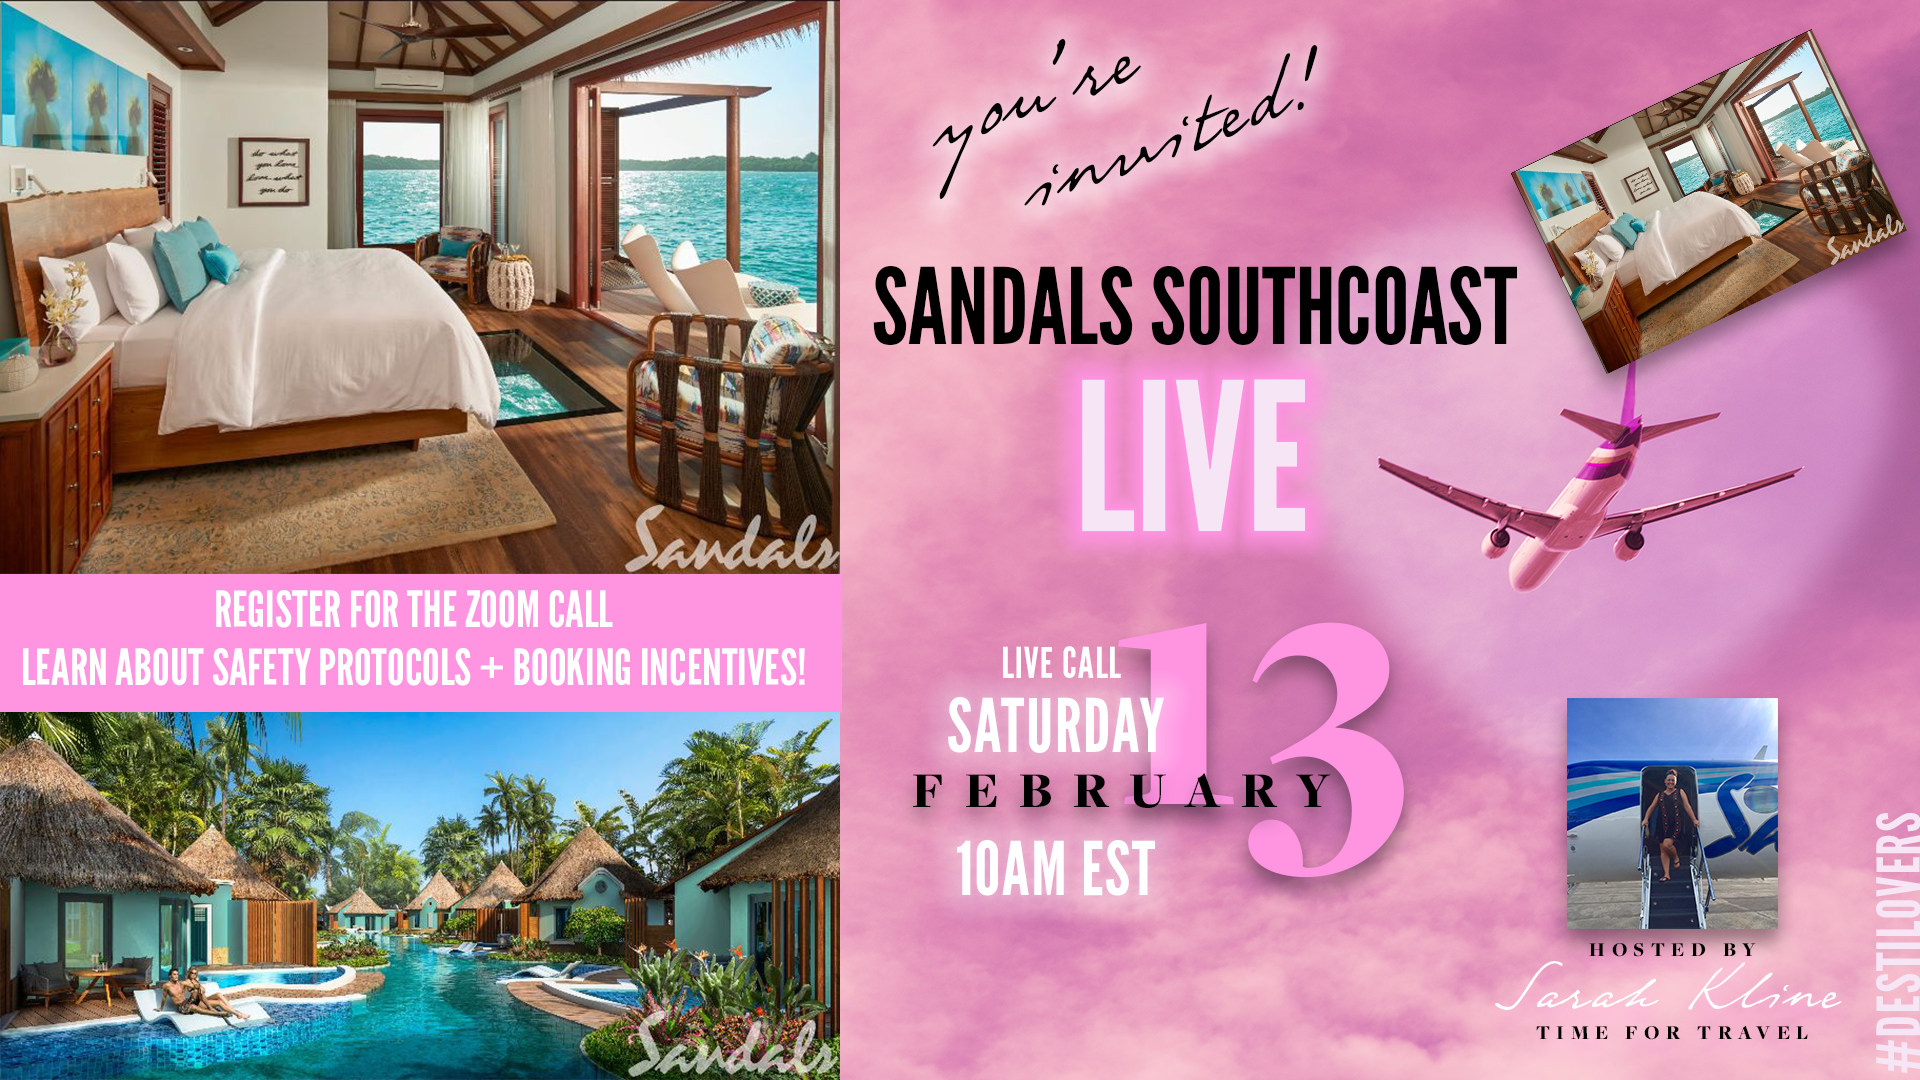 Sandals South Coast LIVE Invitation - FB EVENT COVER.png